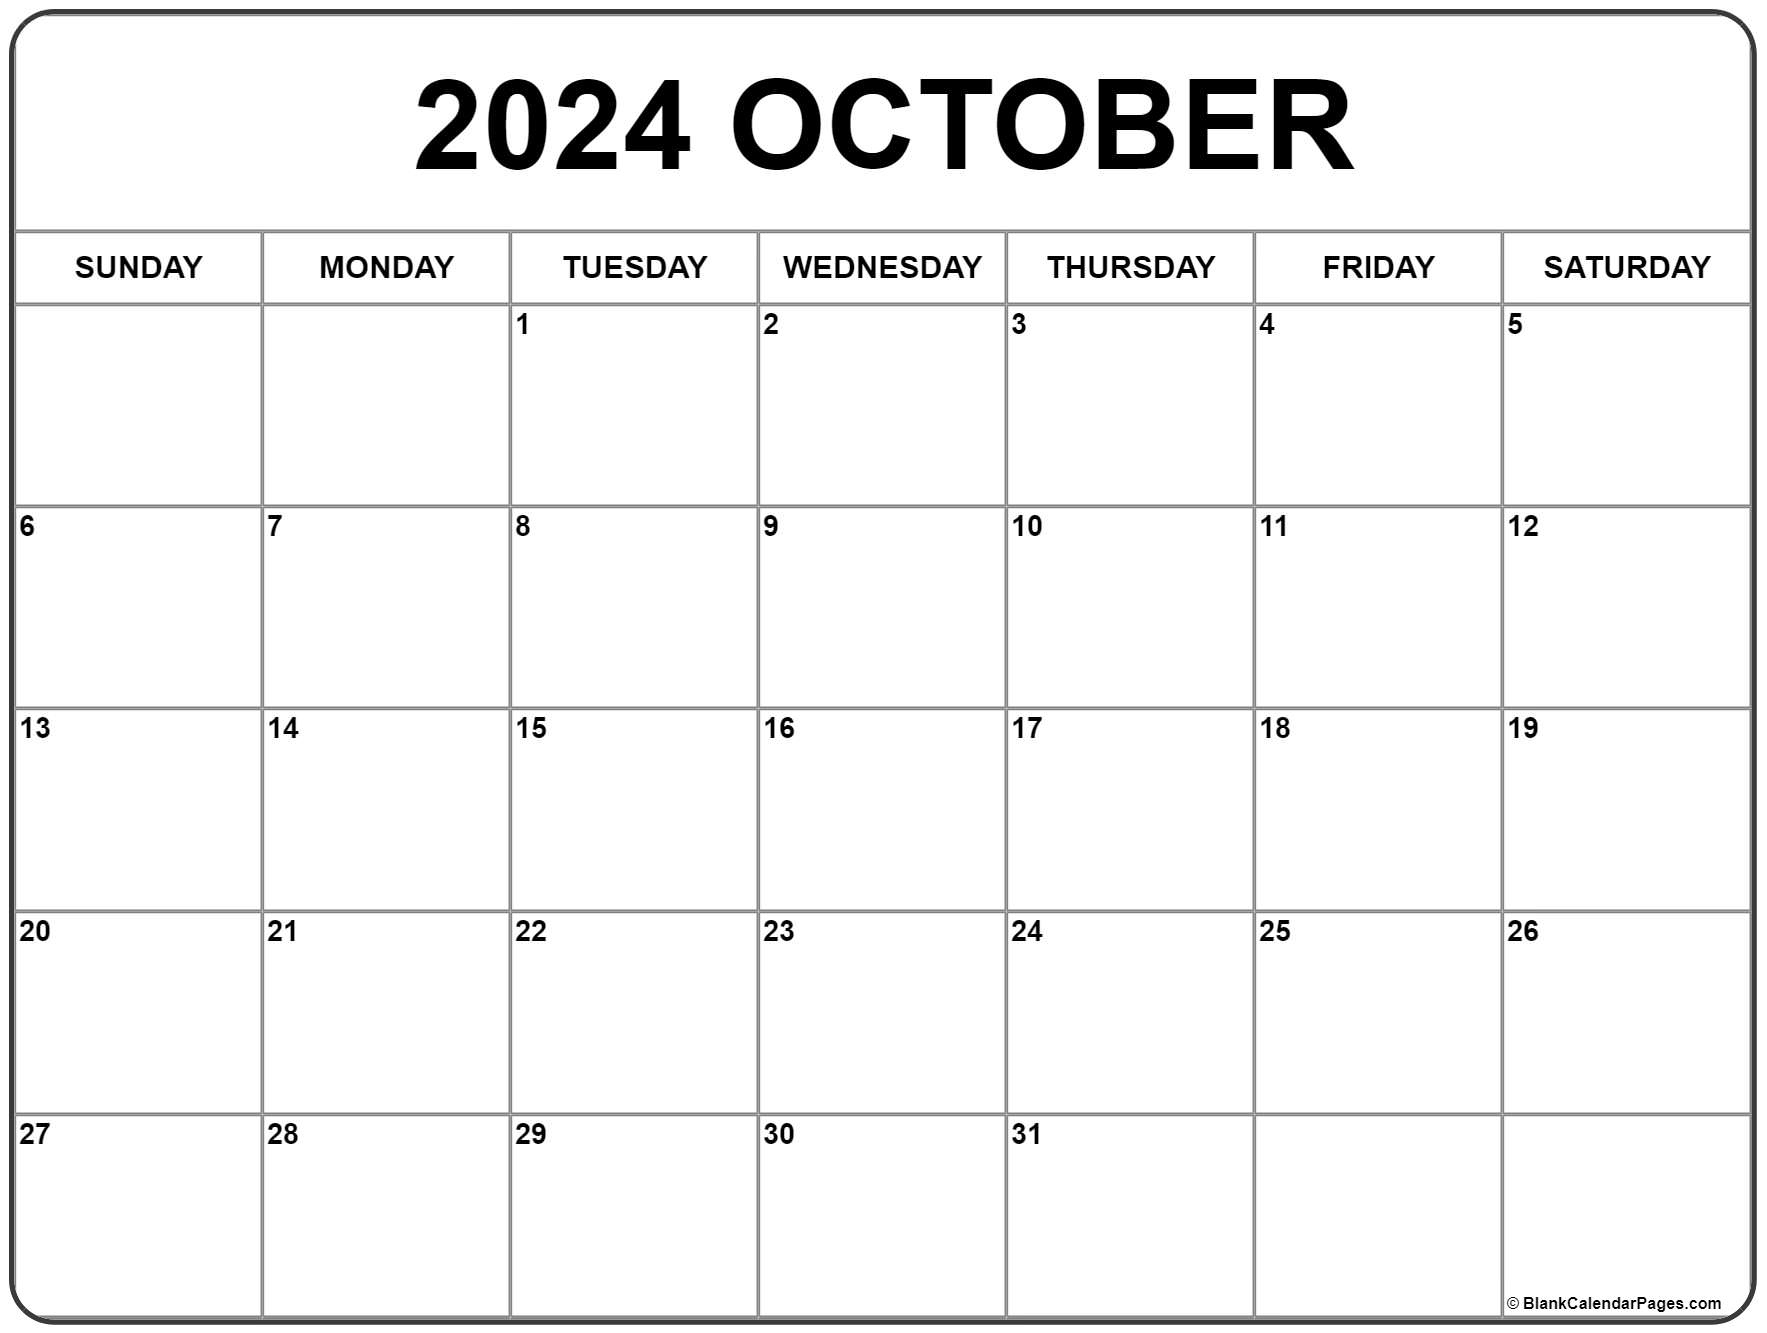 October 2024 Calendar | Free Printable Calendar with Free Printable Blank October Calendar 2024